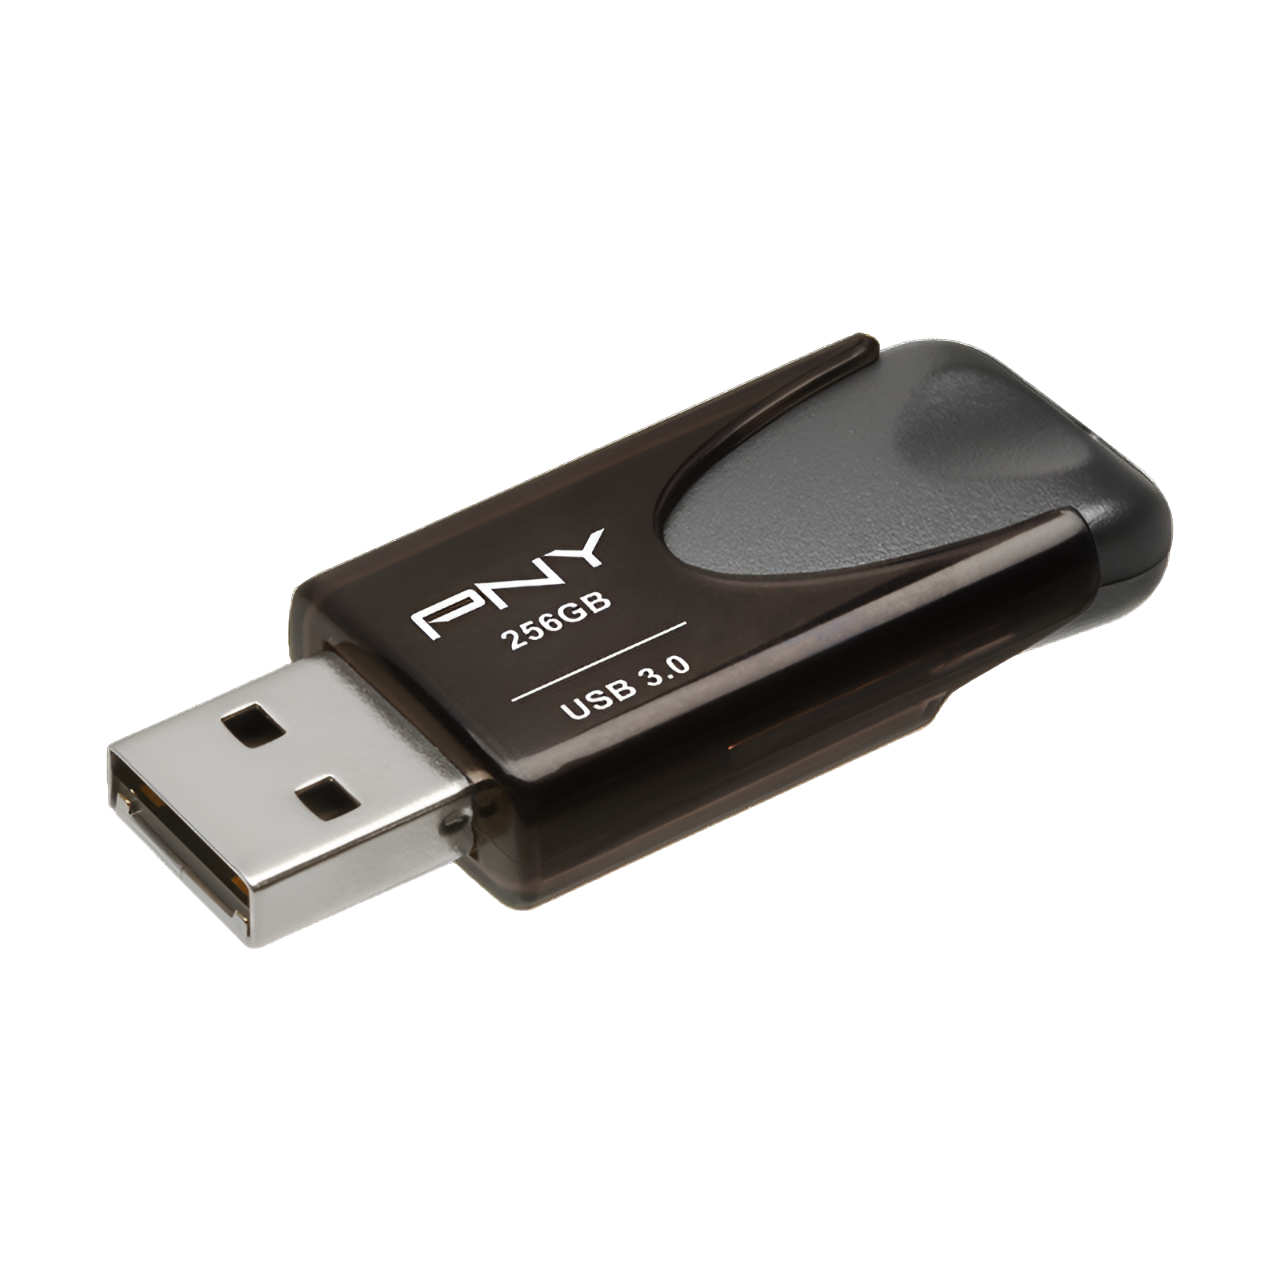 PNY Turbo Attache 4 256GB USB 3.0 Flash Drive 1Yr Wty